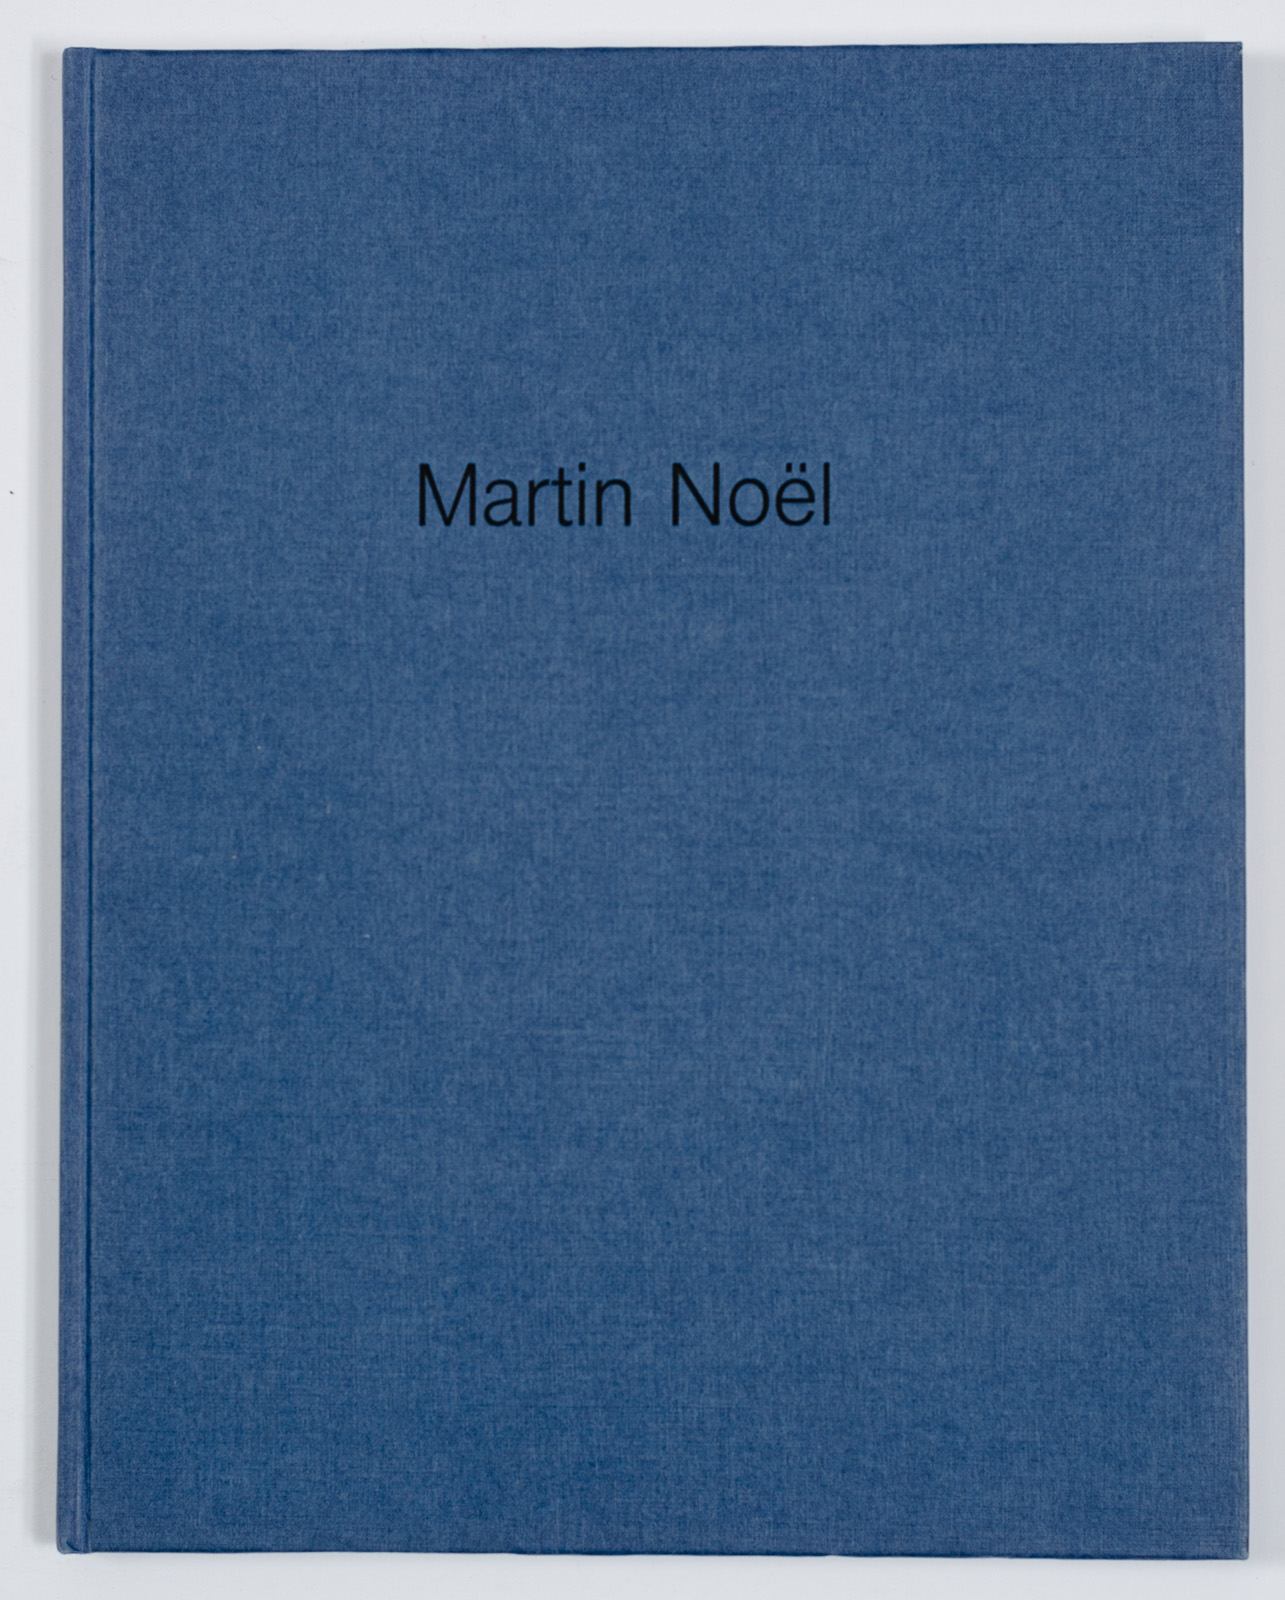 Noel, Martin - Image 4 of 4